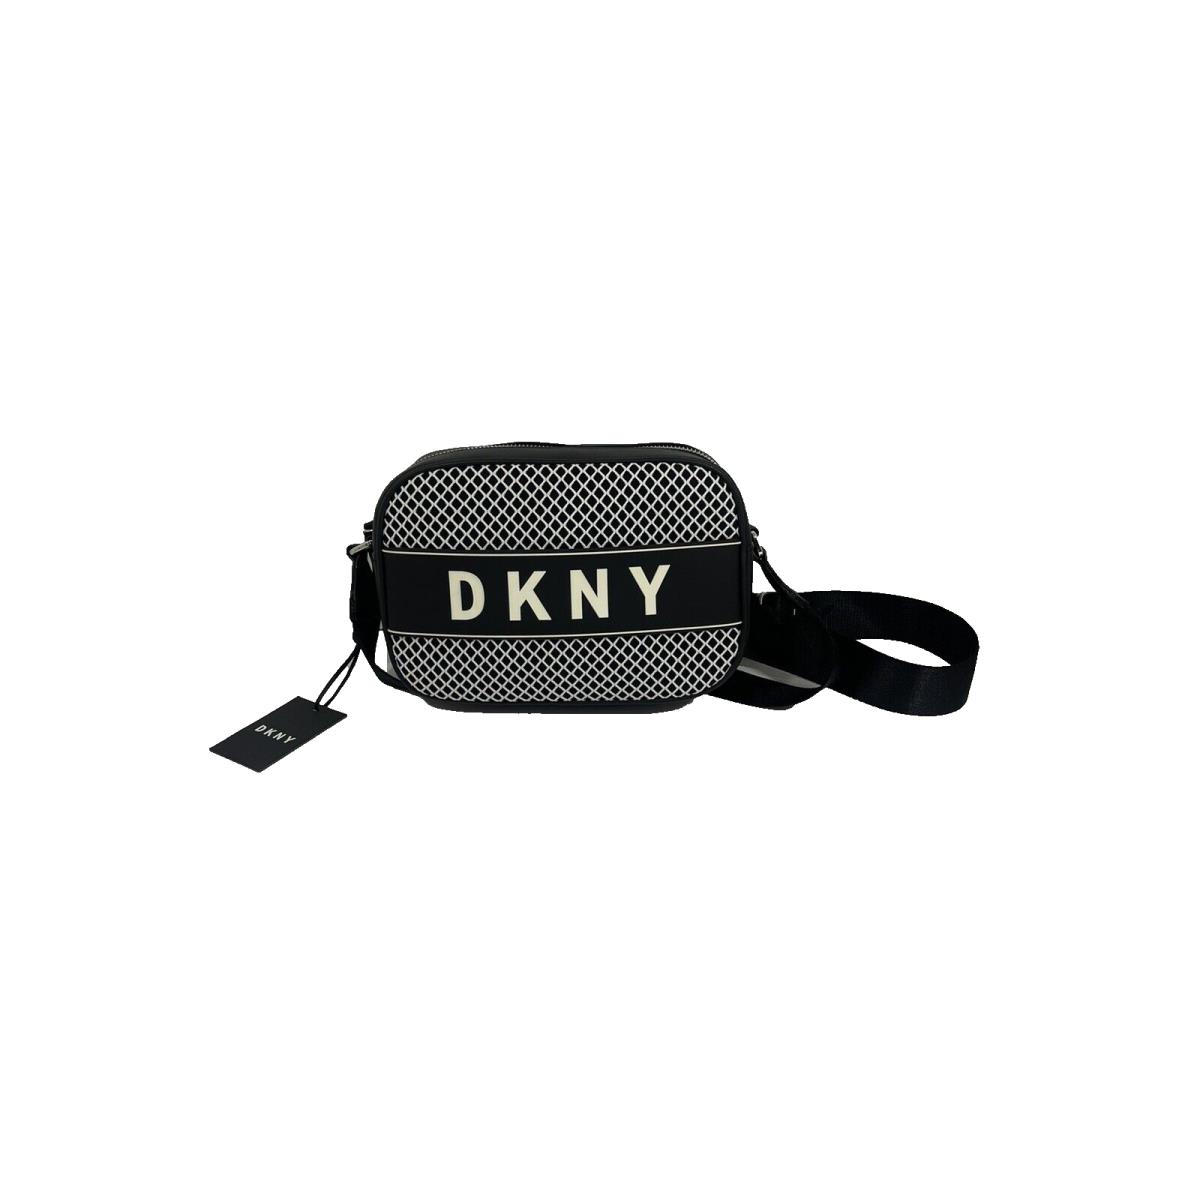 Dkny Crossbody Clutch Bag Black and White